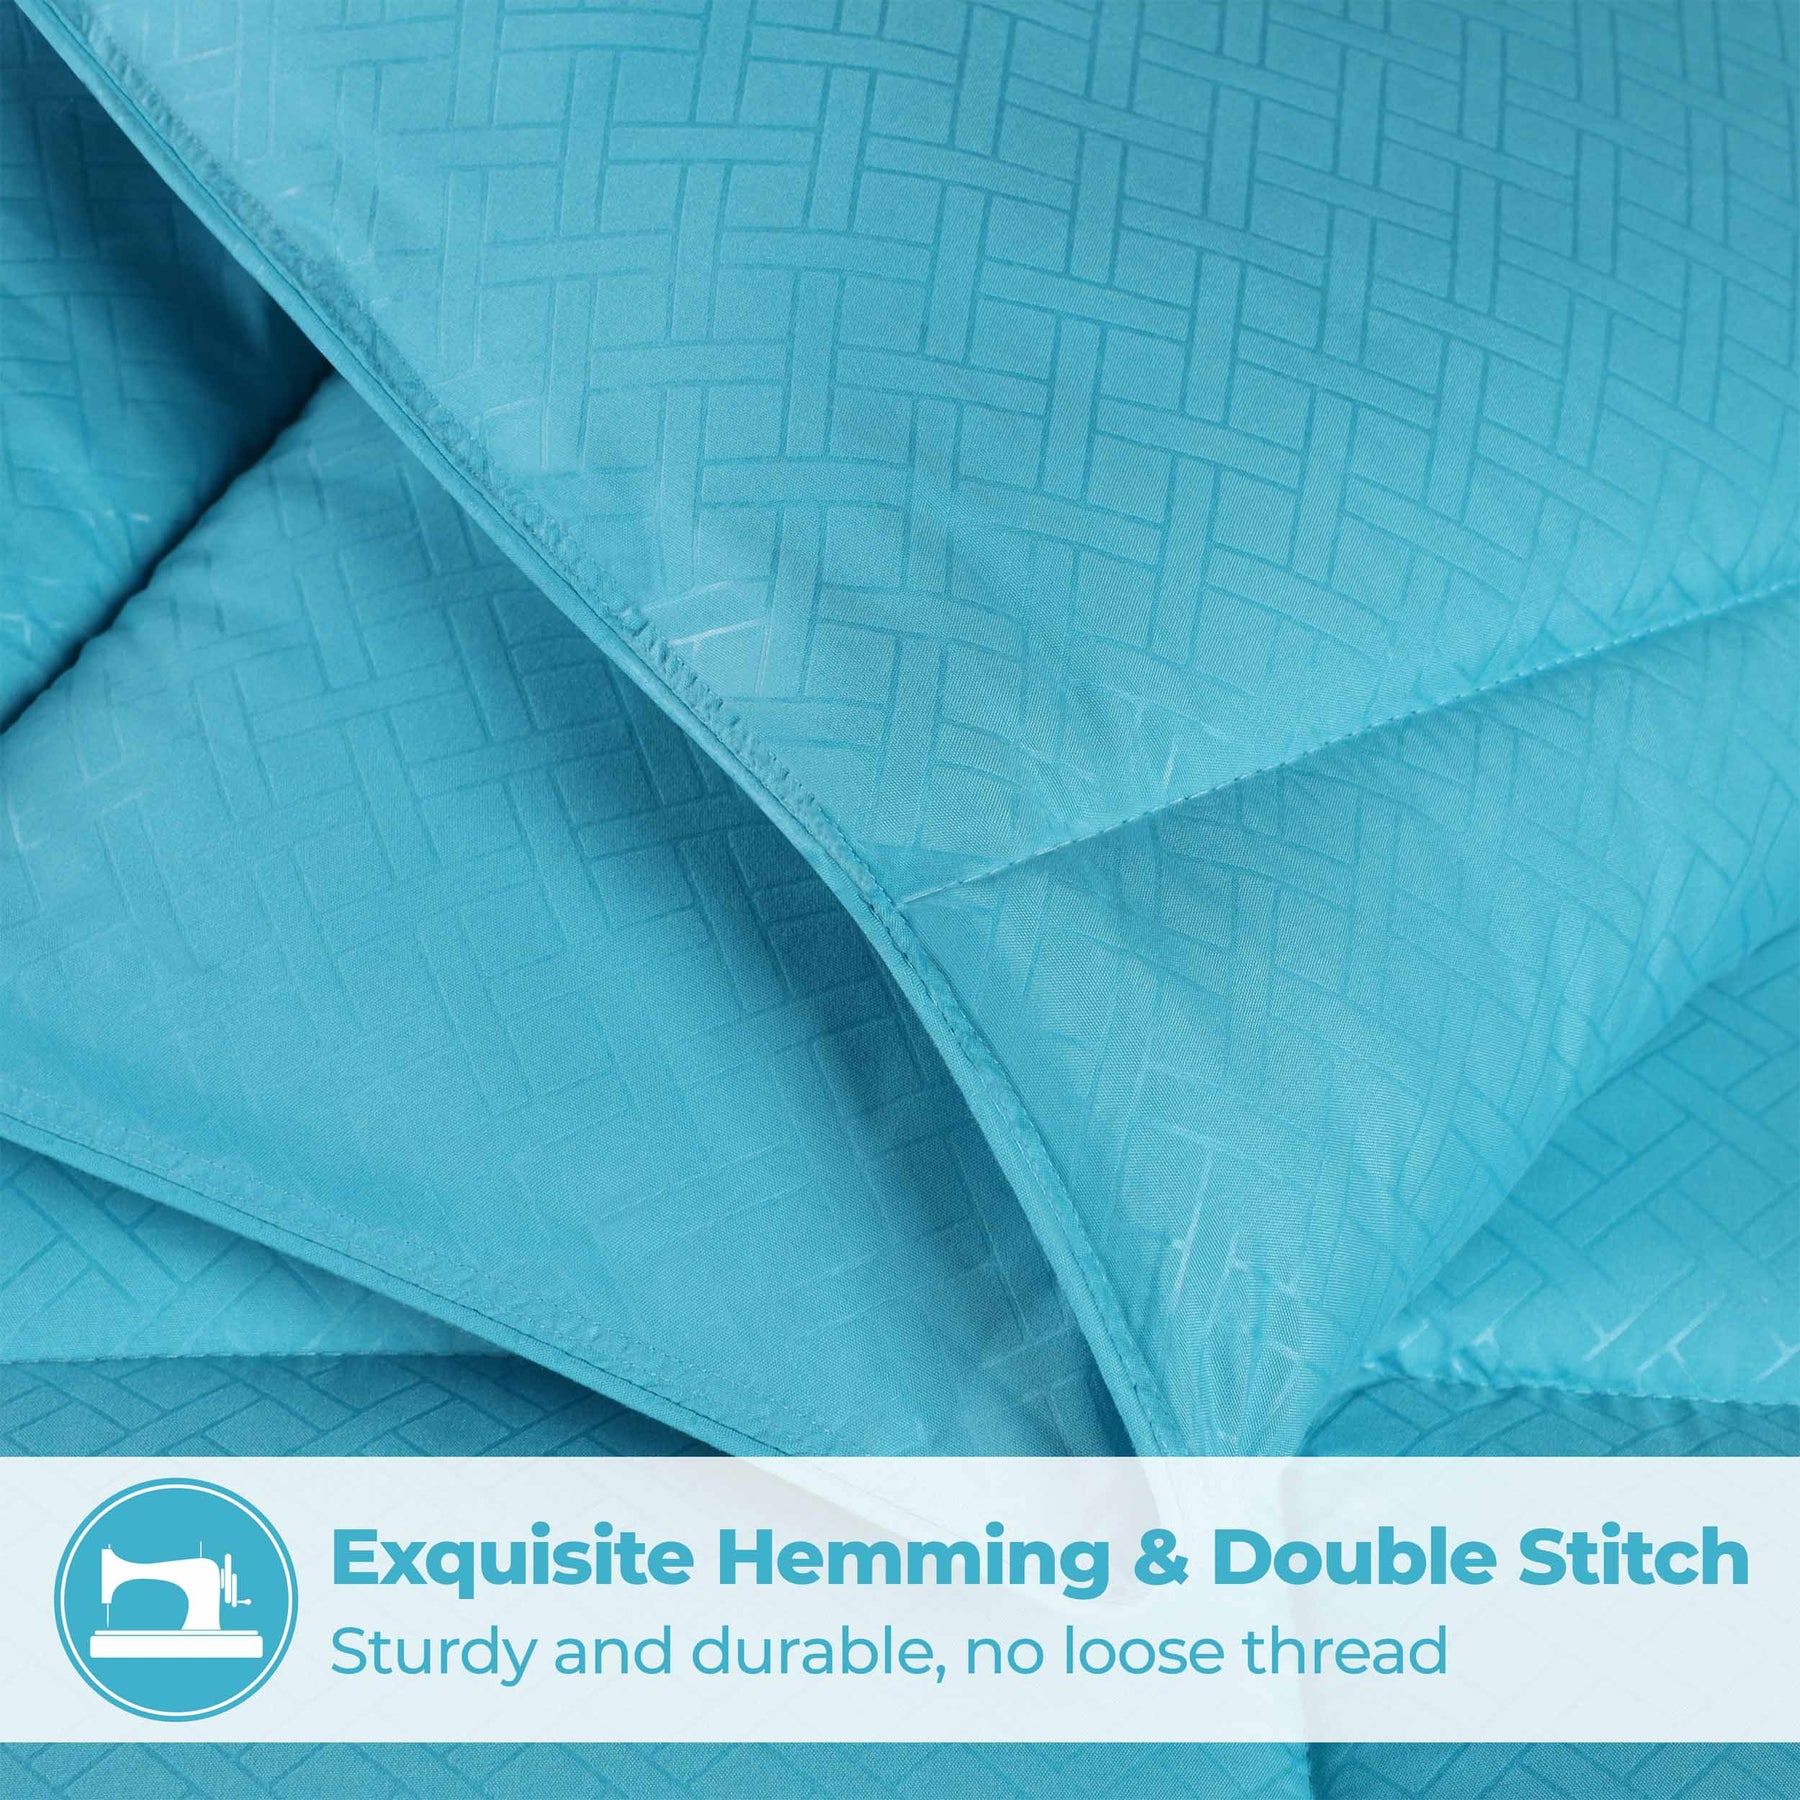 Monochrome Basketweave Plush Microfiber Down Alternative Comforter - Winter Blue